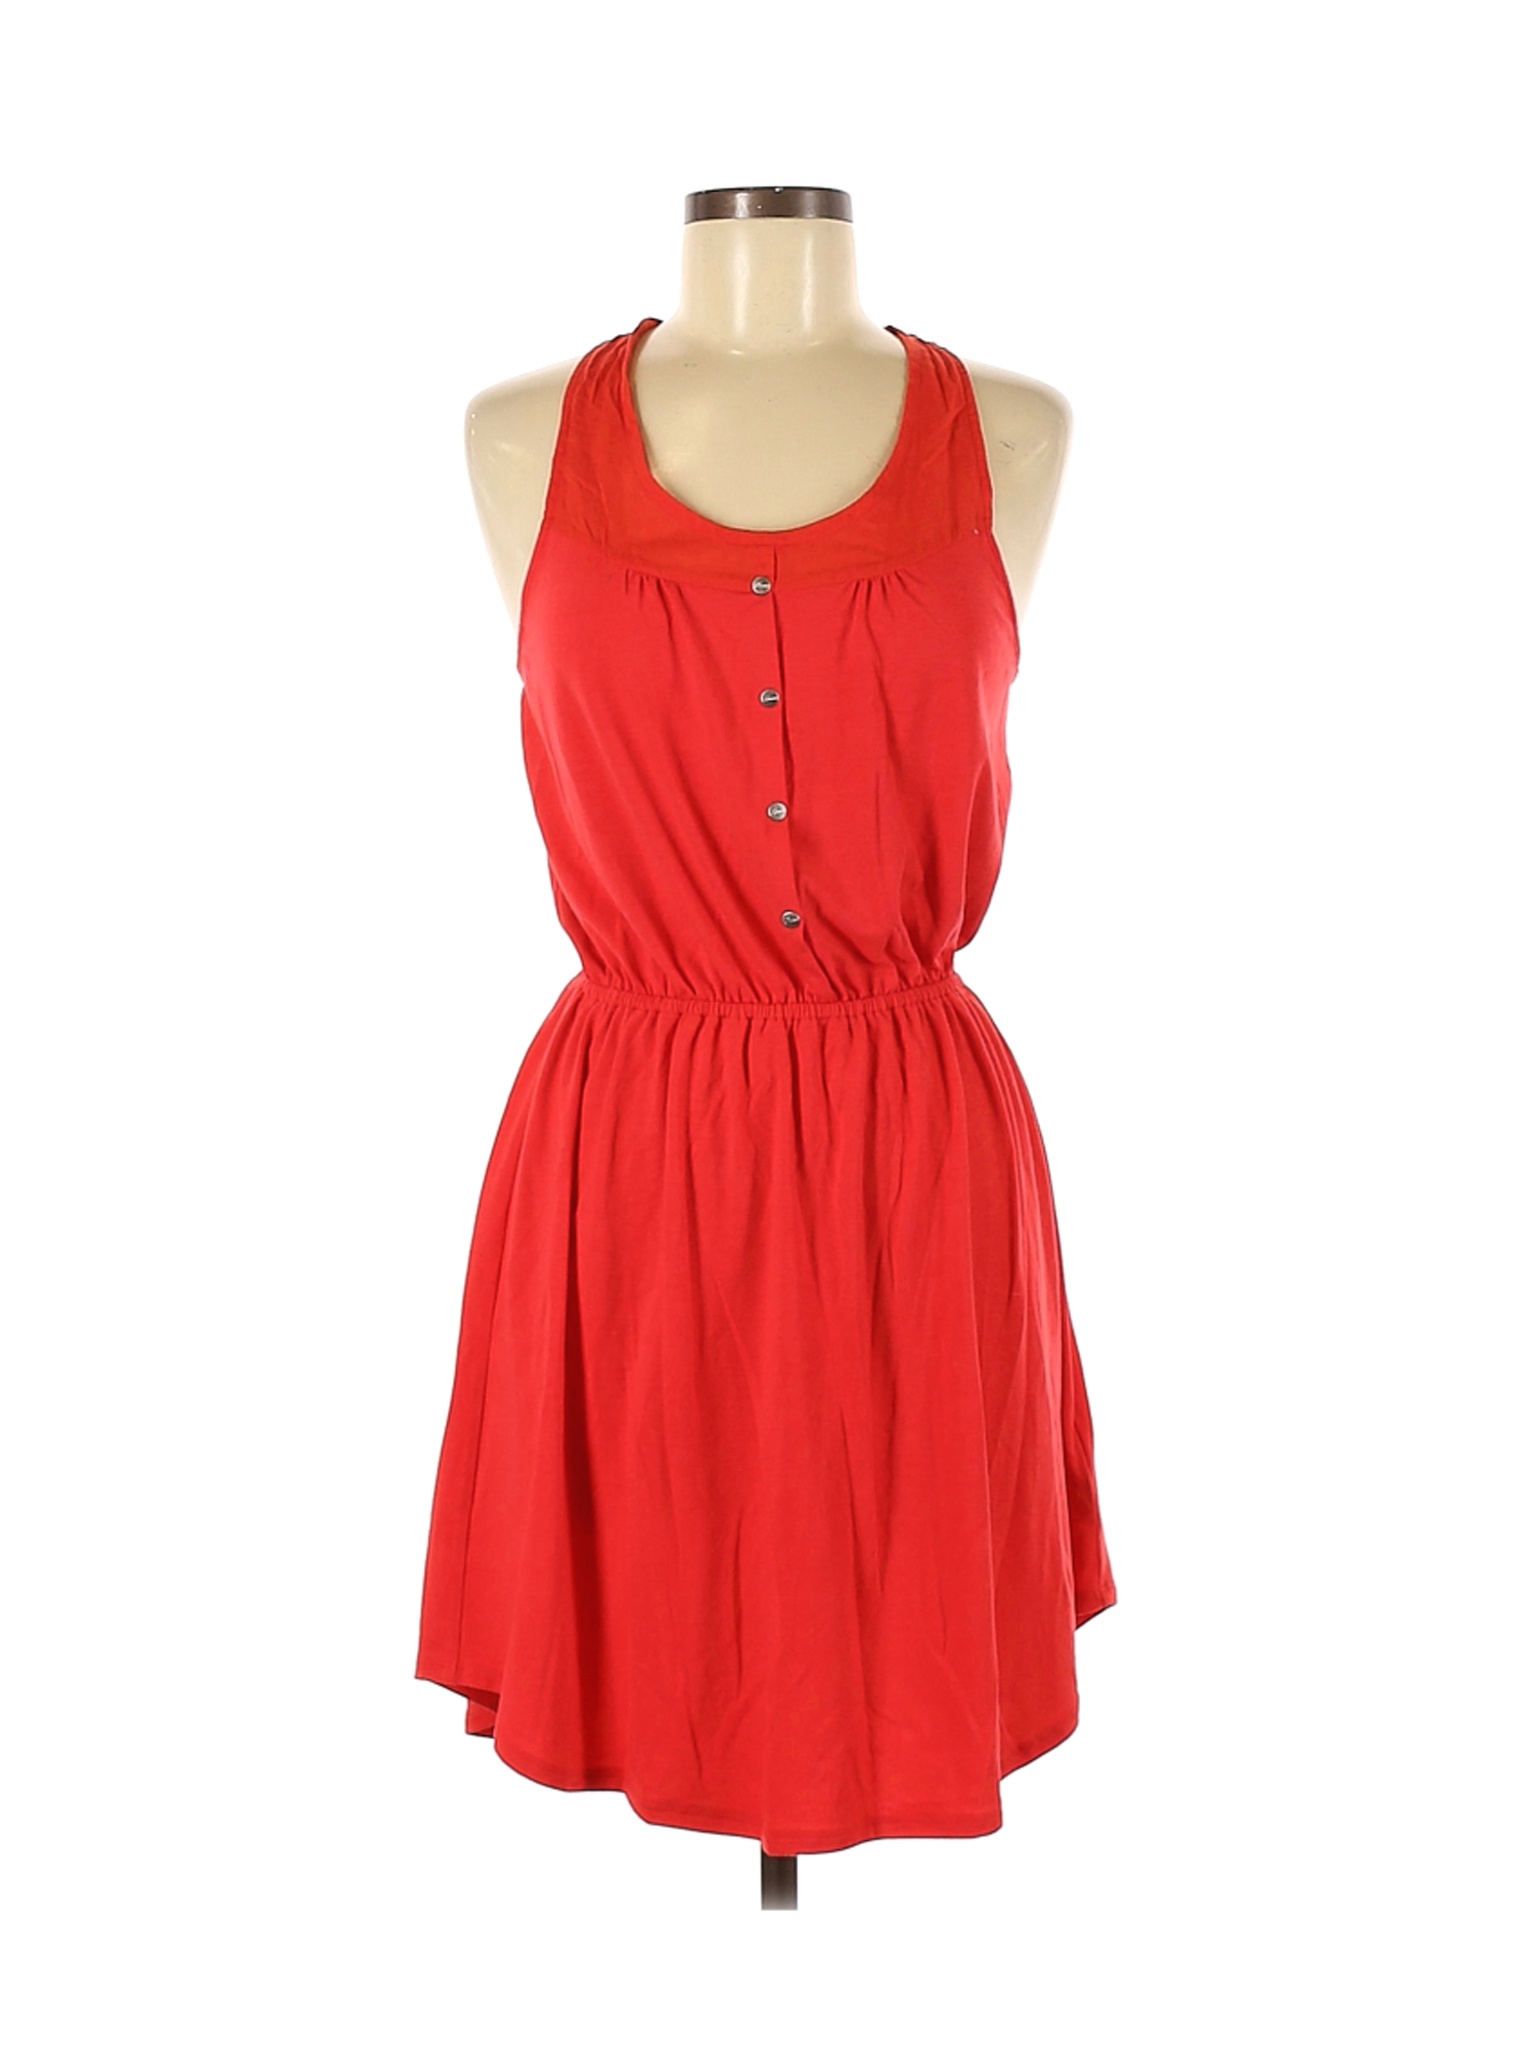 Guess Women Red Casual Dress M | eBay